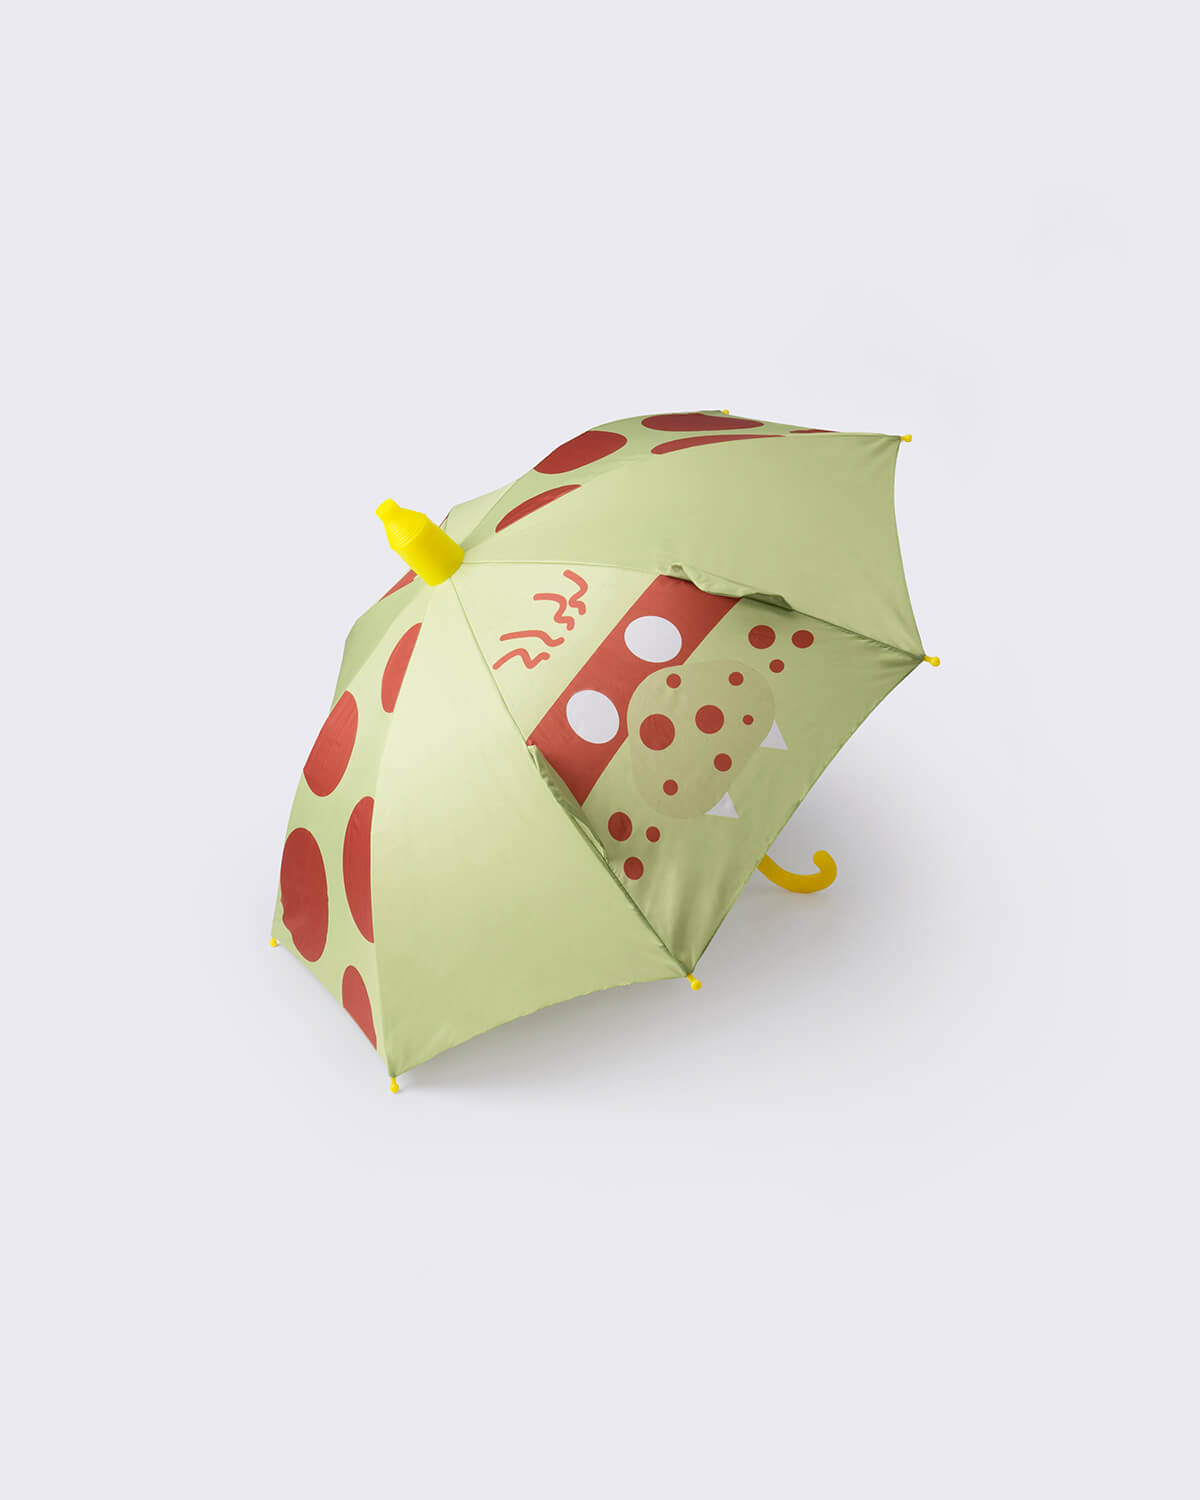 Arthur Hacker Lap Sap Chung Umbrella